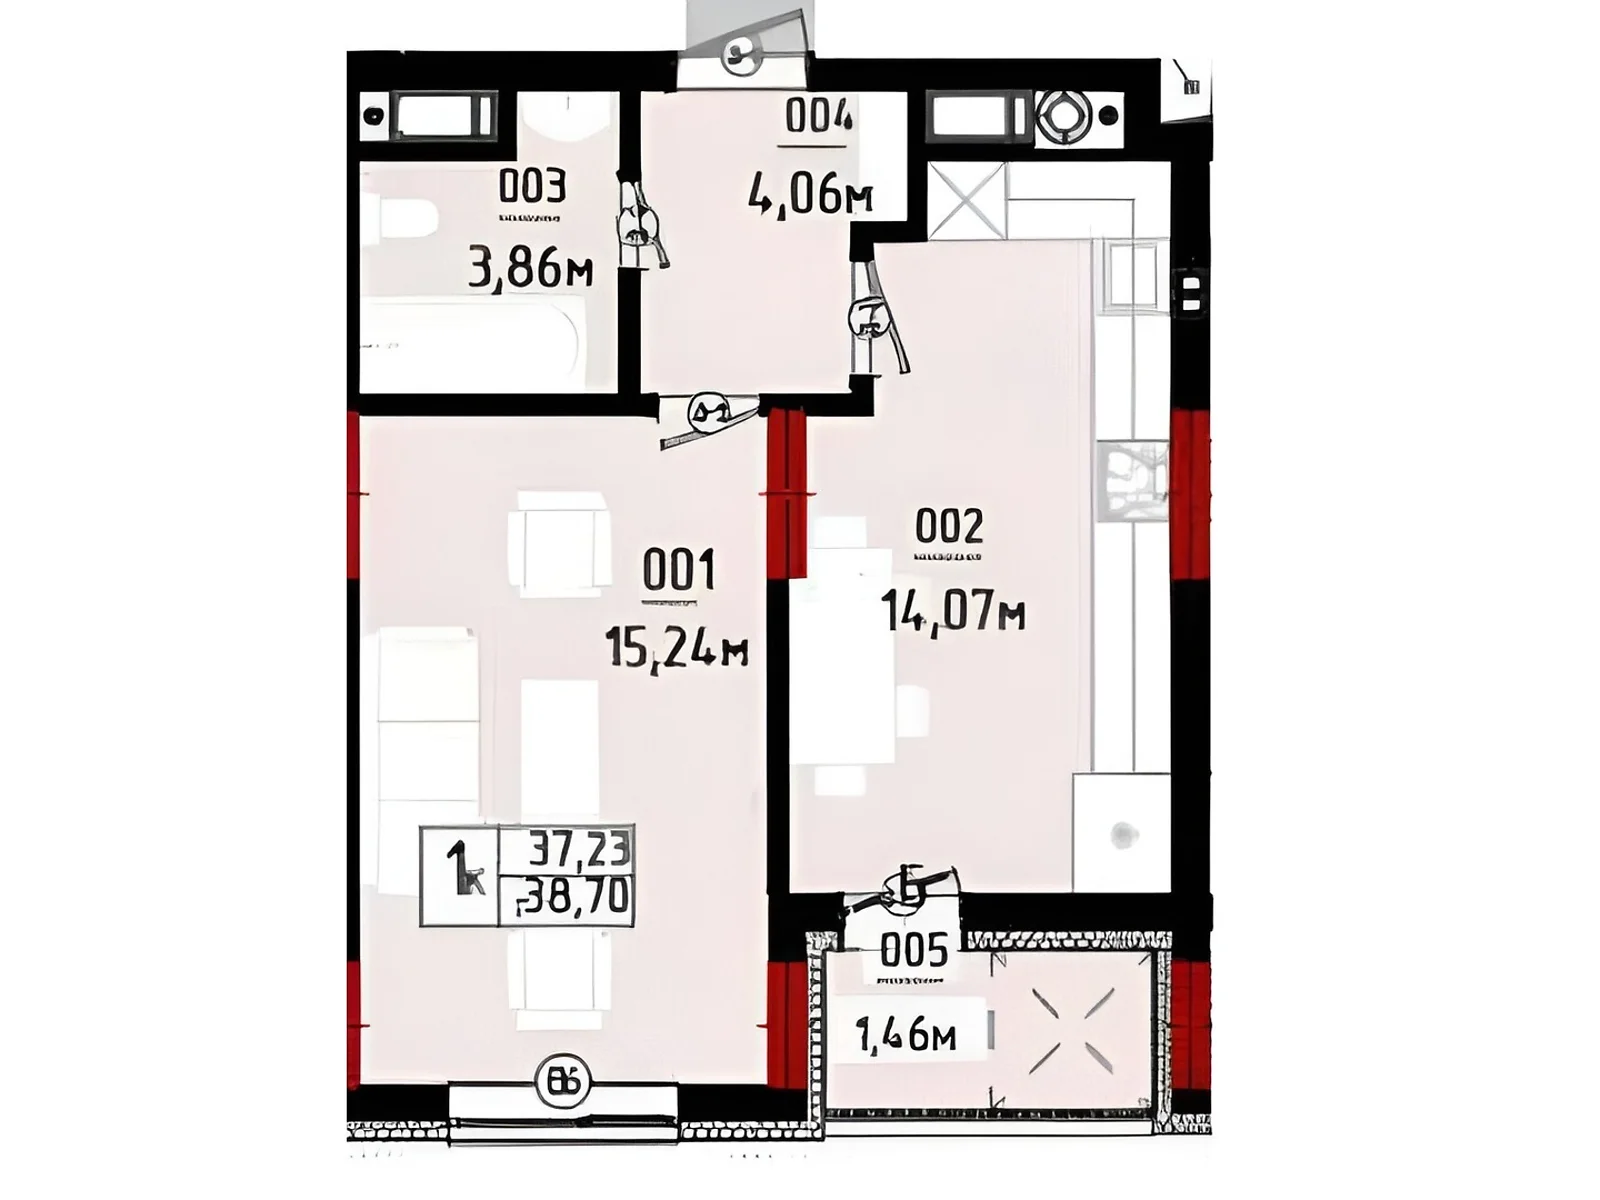 Продается 2-комнатная квартира 59.98 кв. м в Ивано-Франковске - фото 1